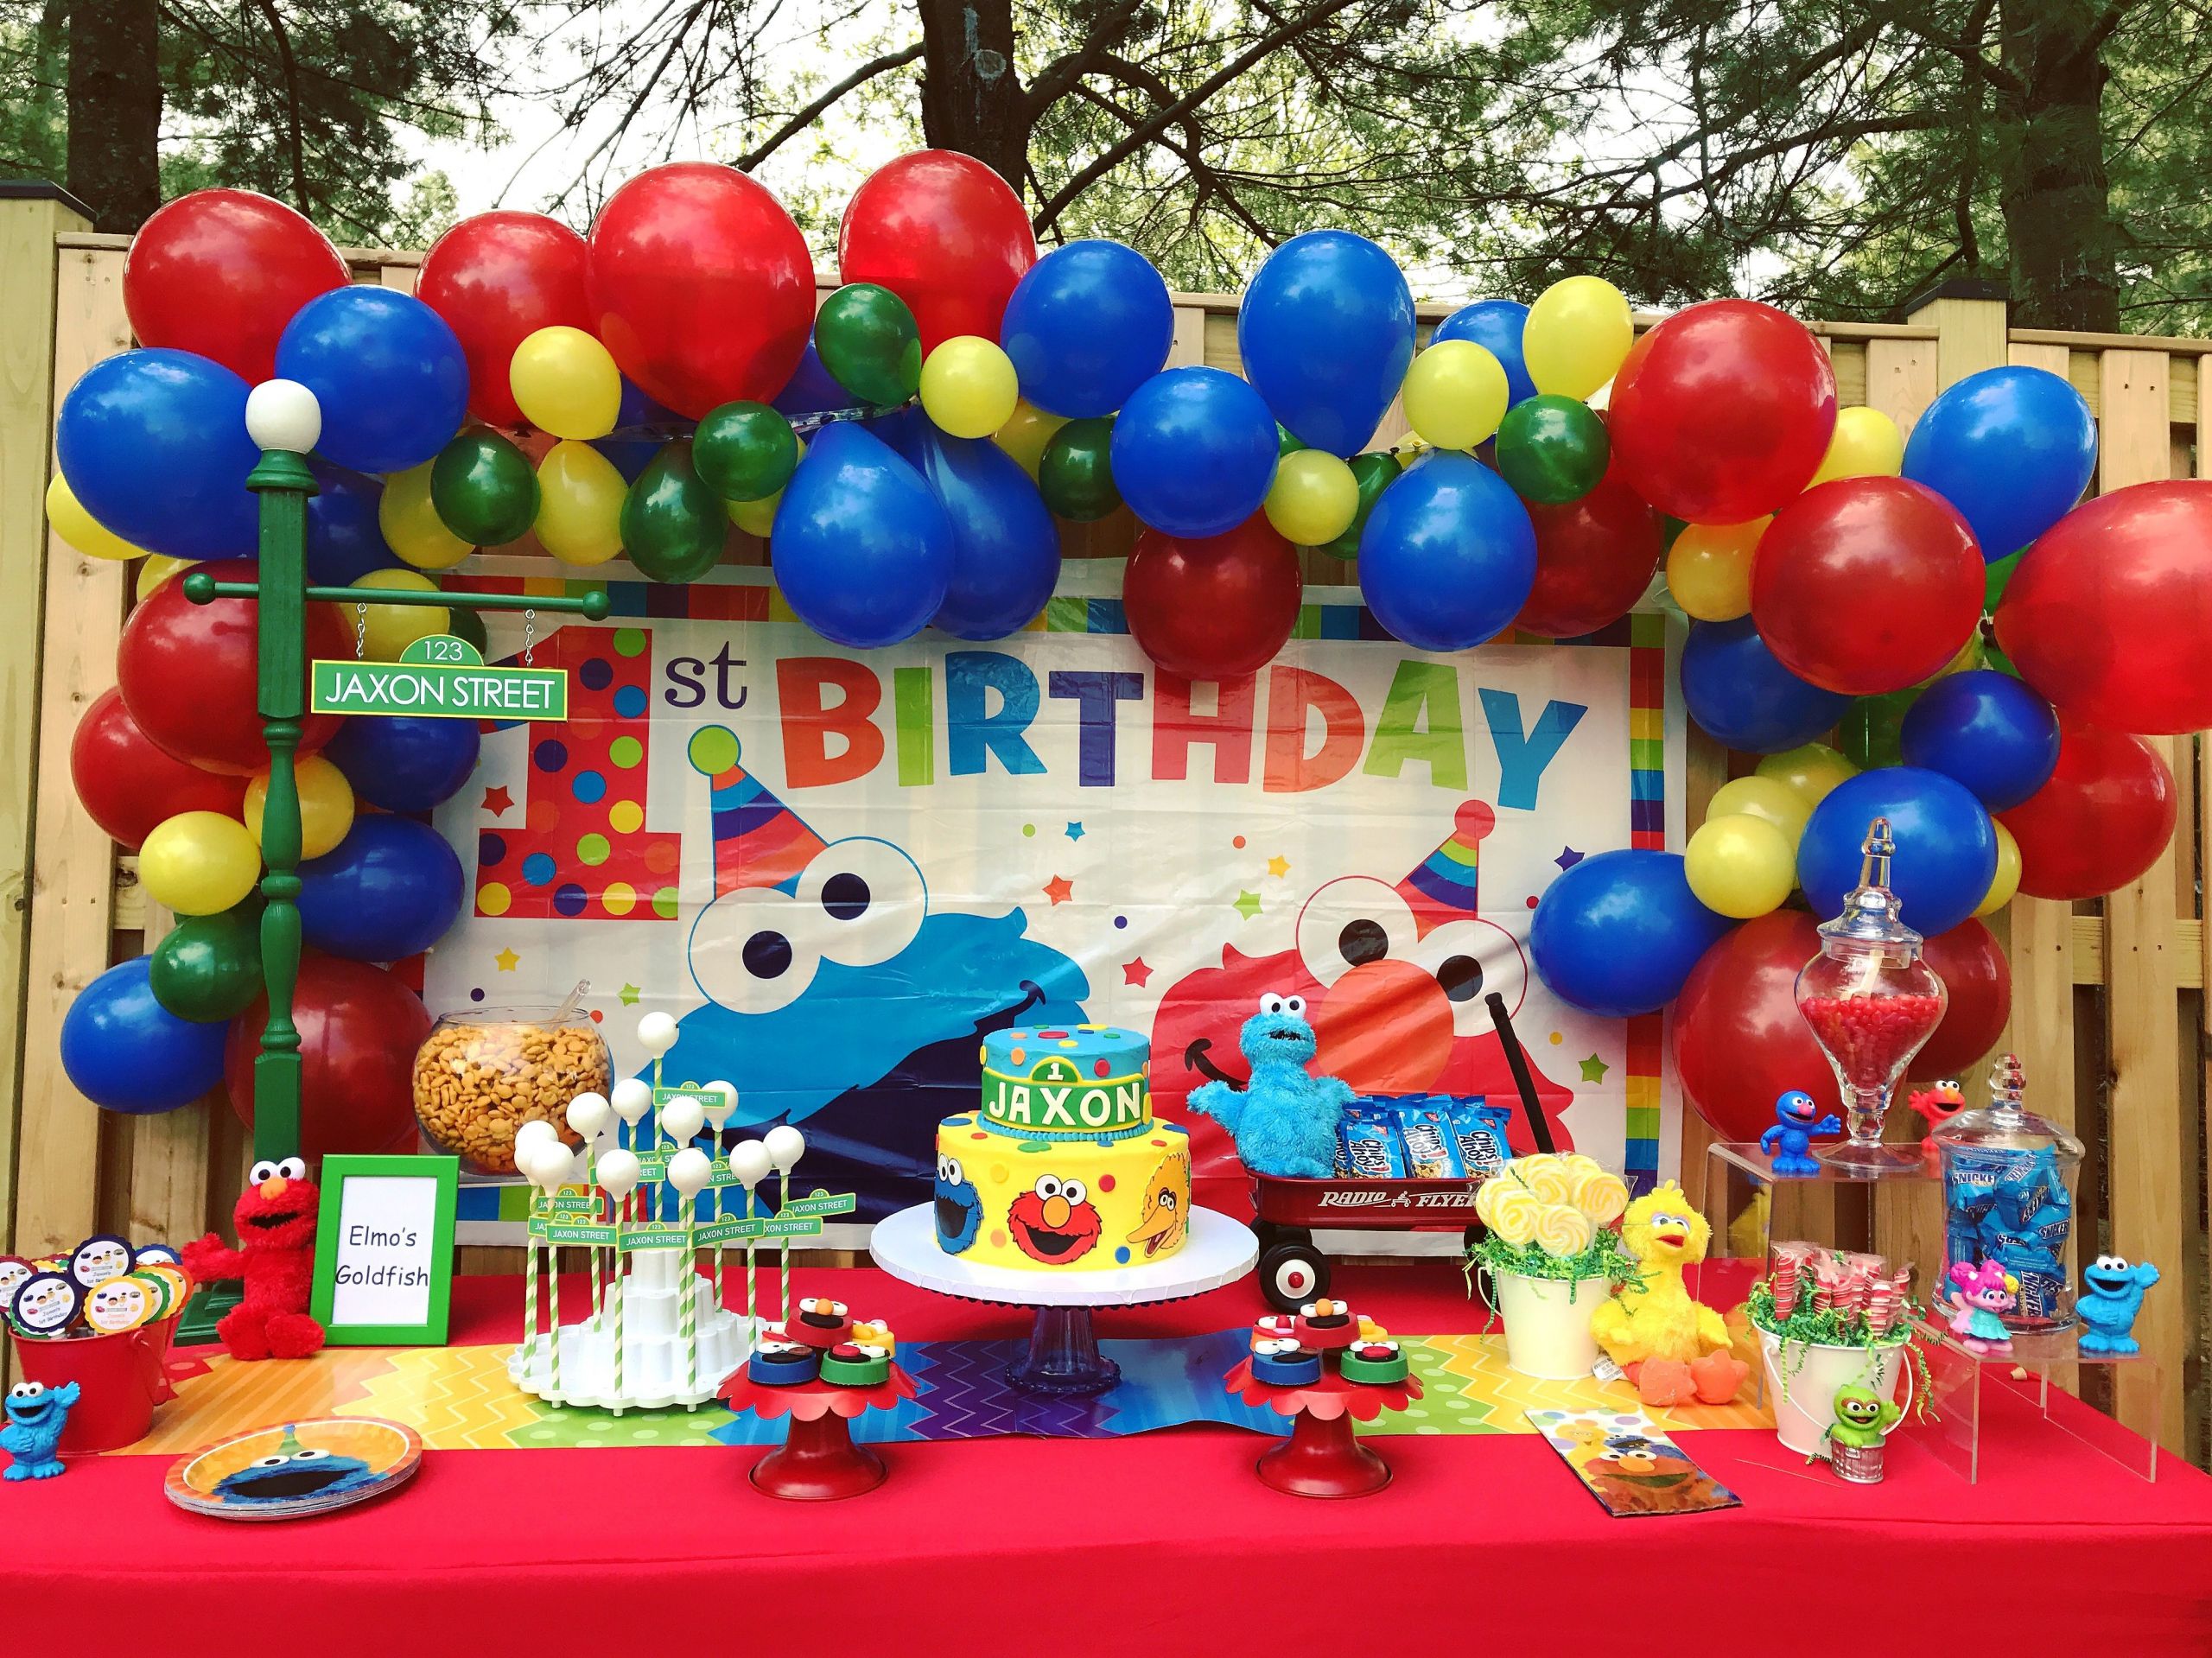 Sesame Street 1st Birthday Party Supplies
 Sesame Street first birthday